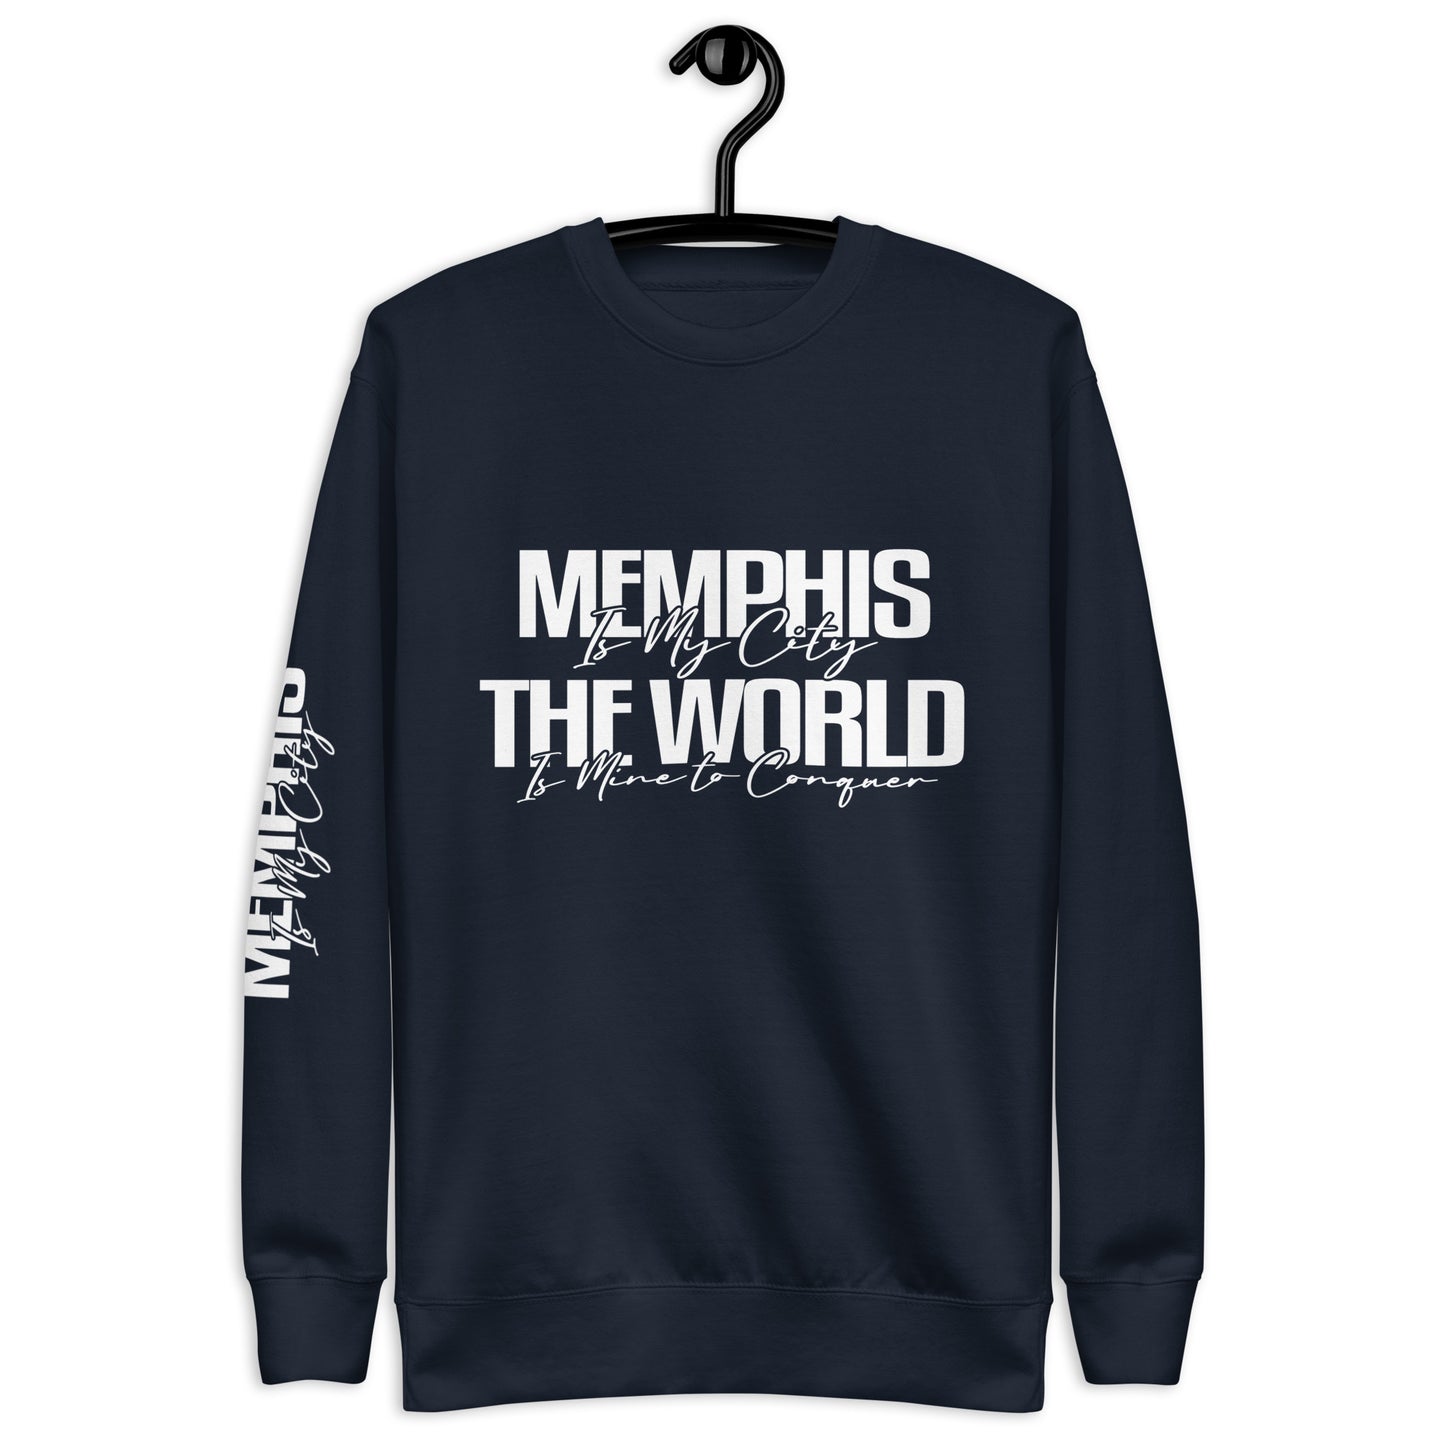 Memphis Is My City Unisex Sweatshirt